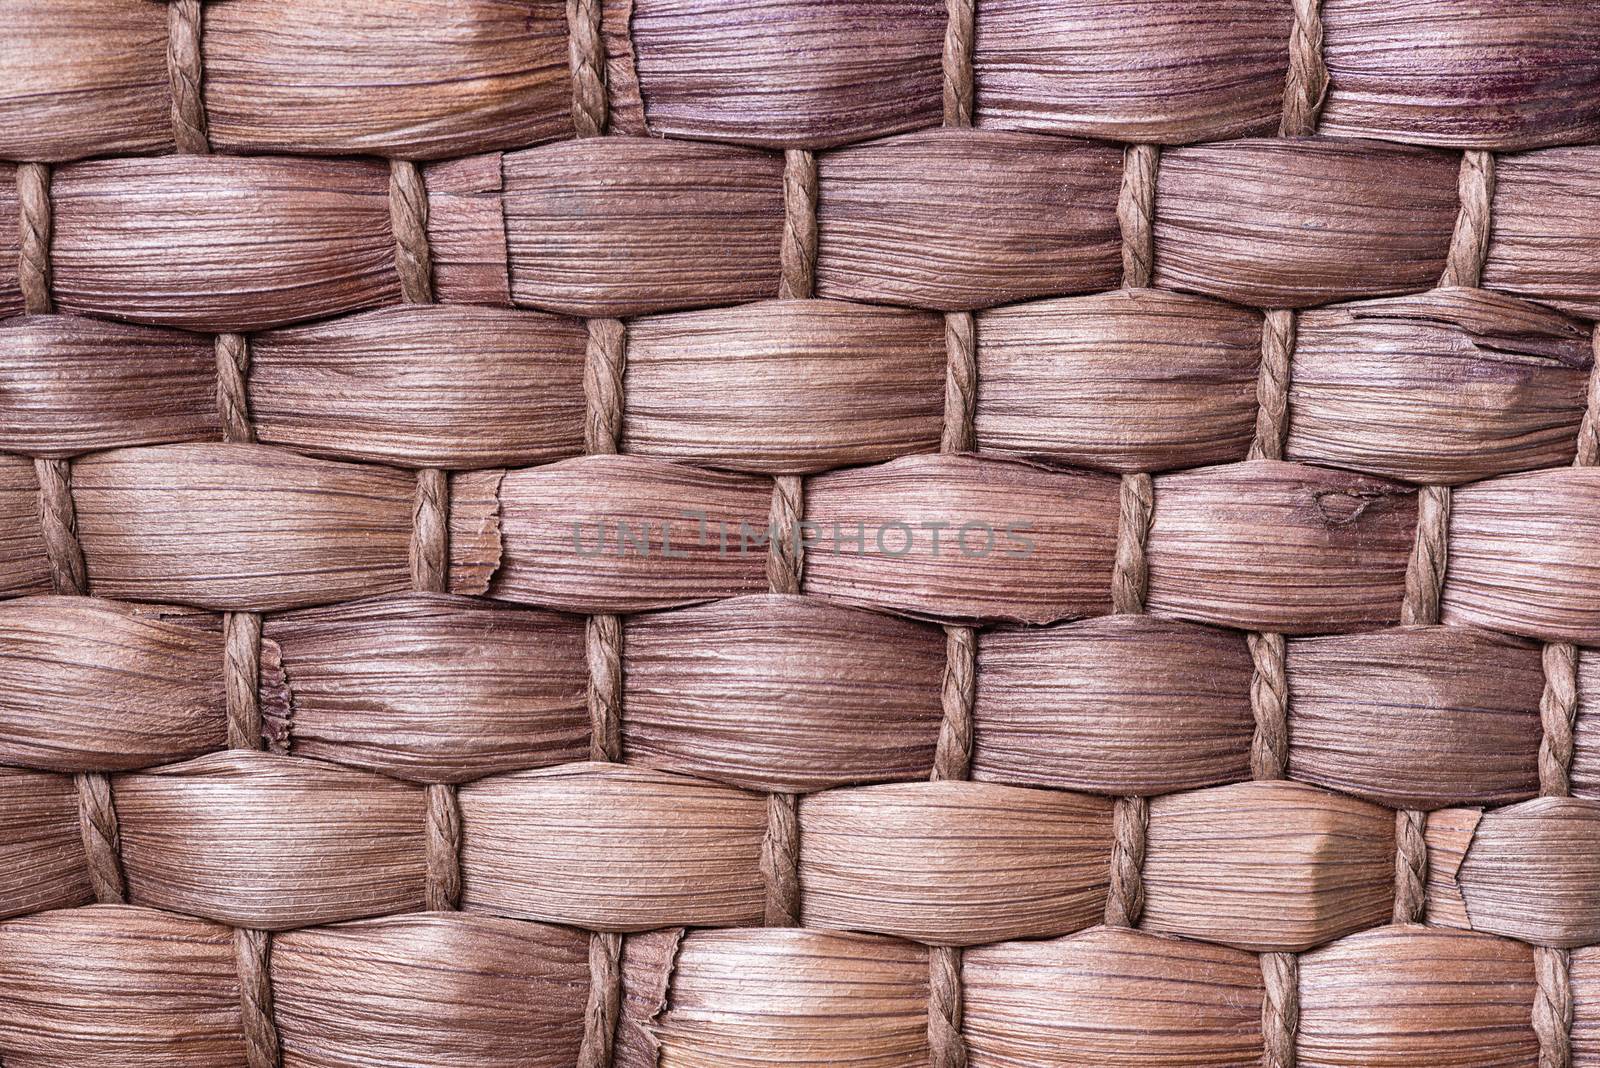 A macro shot of the woven fibers of a brown wicker basket.